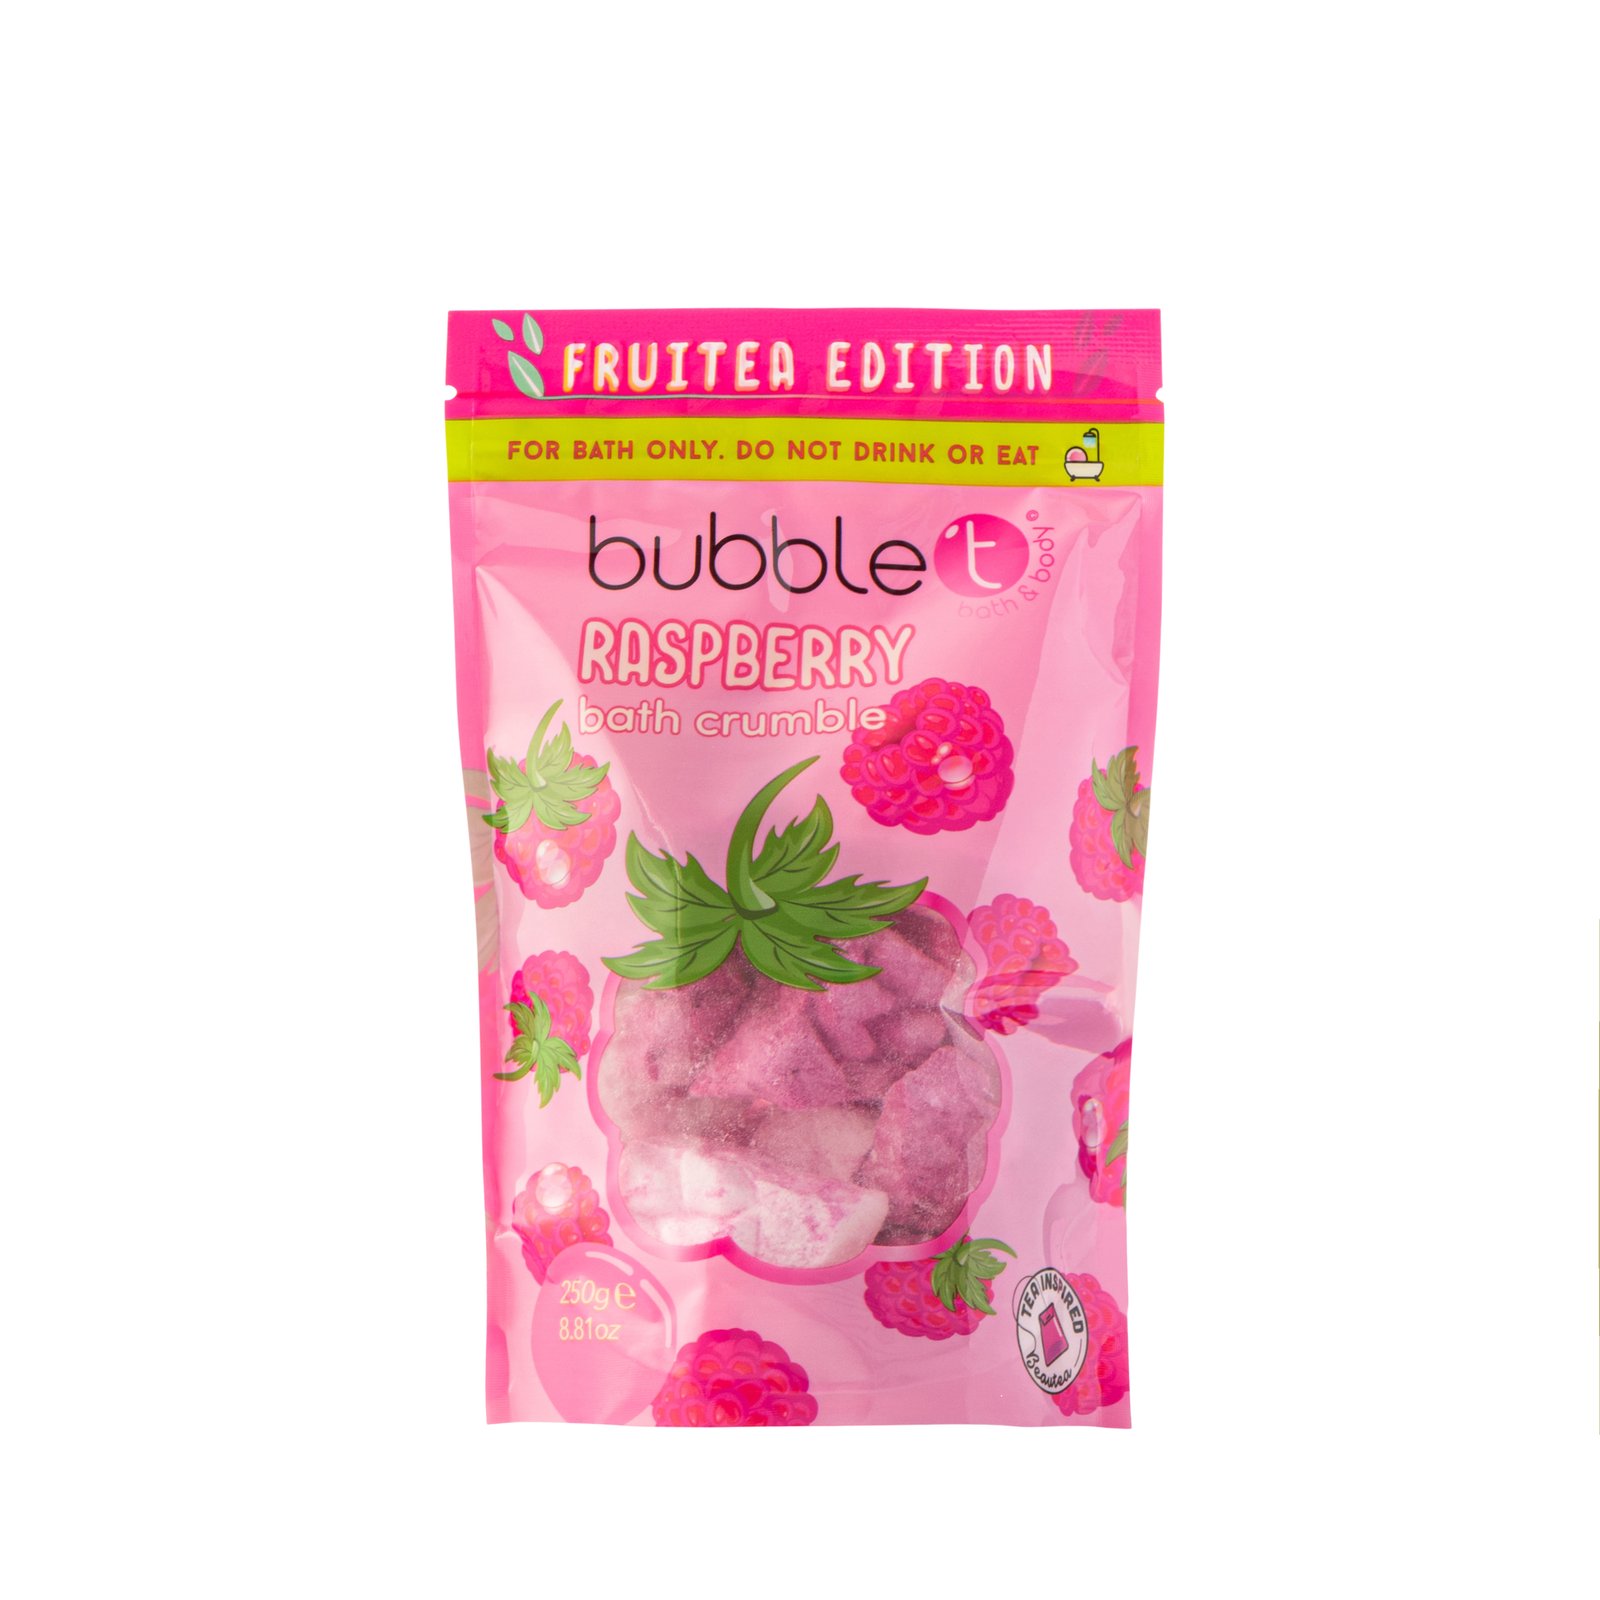 BubbleT Fruitea Raspberry Bath Crumble 250g